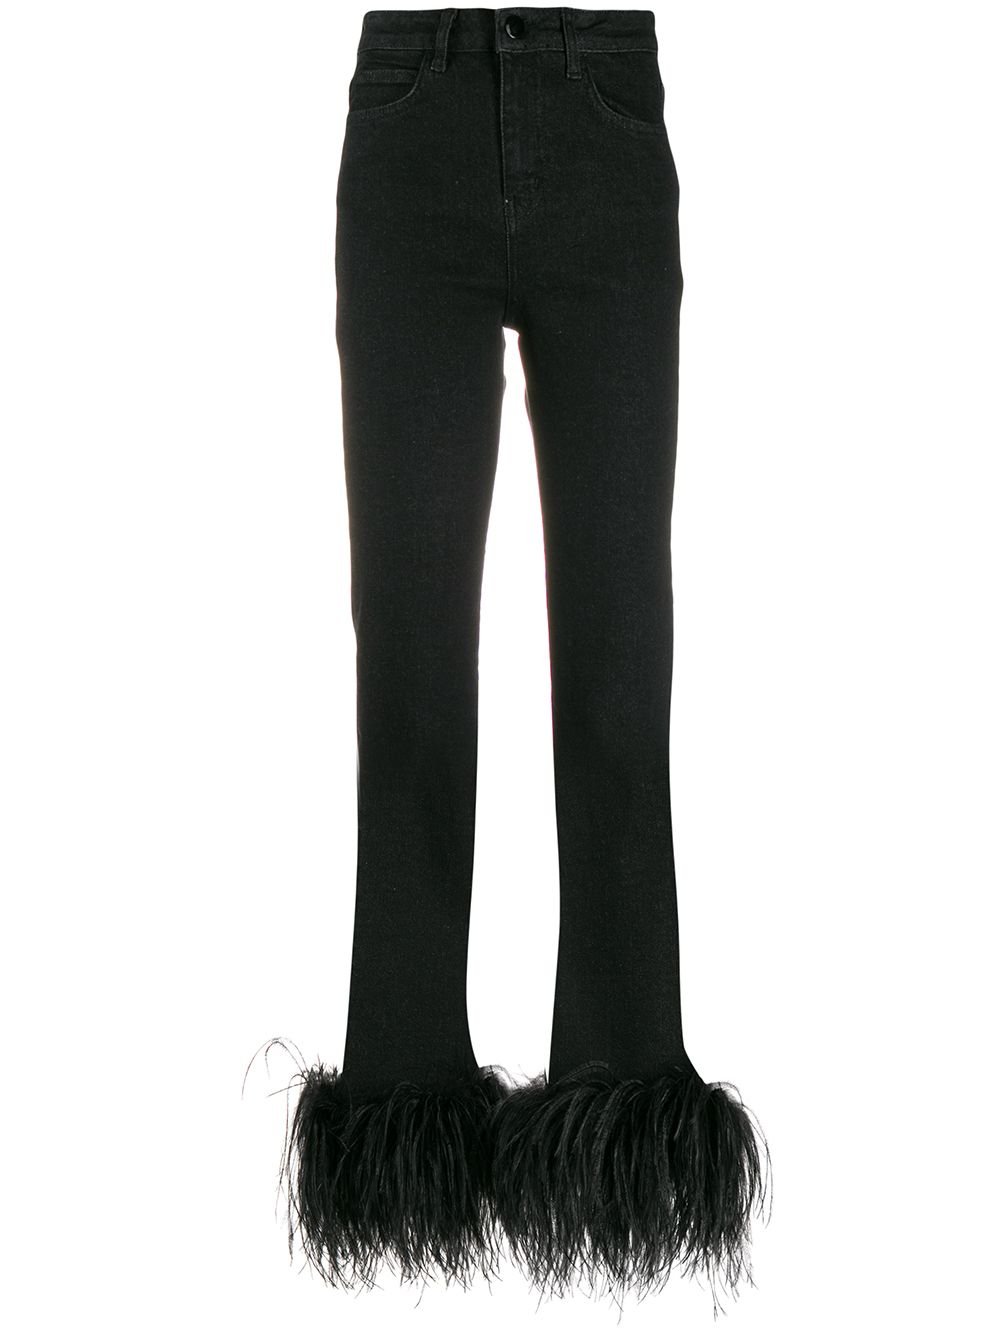 16Arlington - Ostrich feather embellished jeans